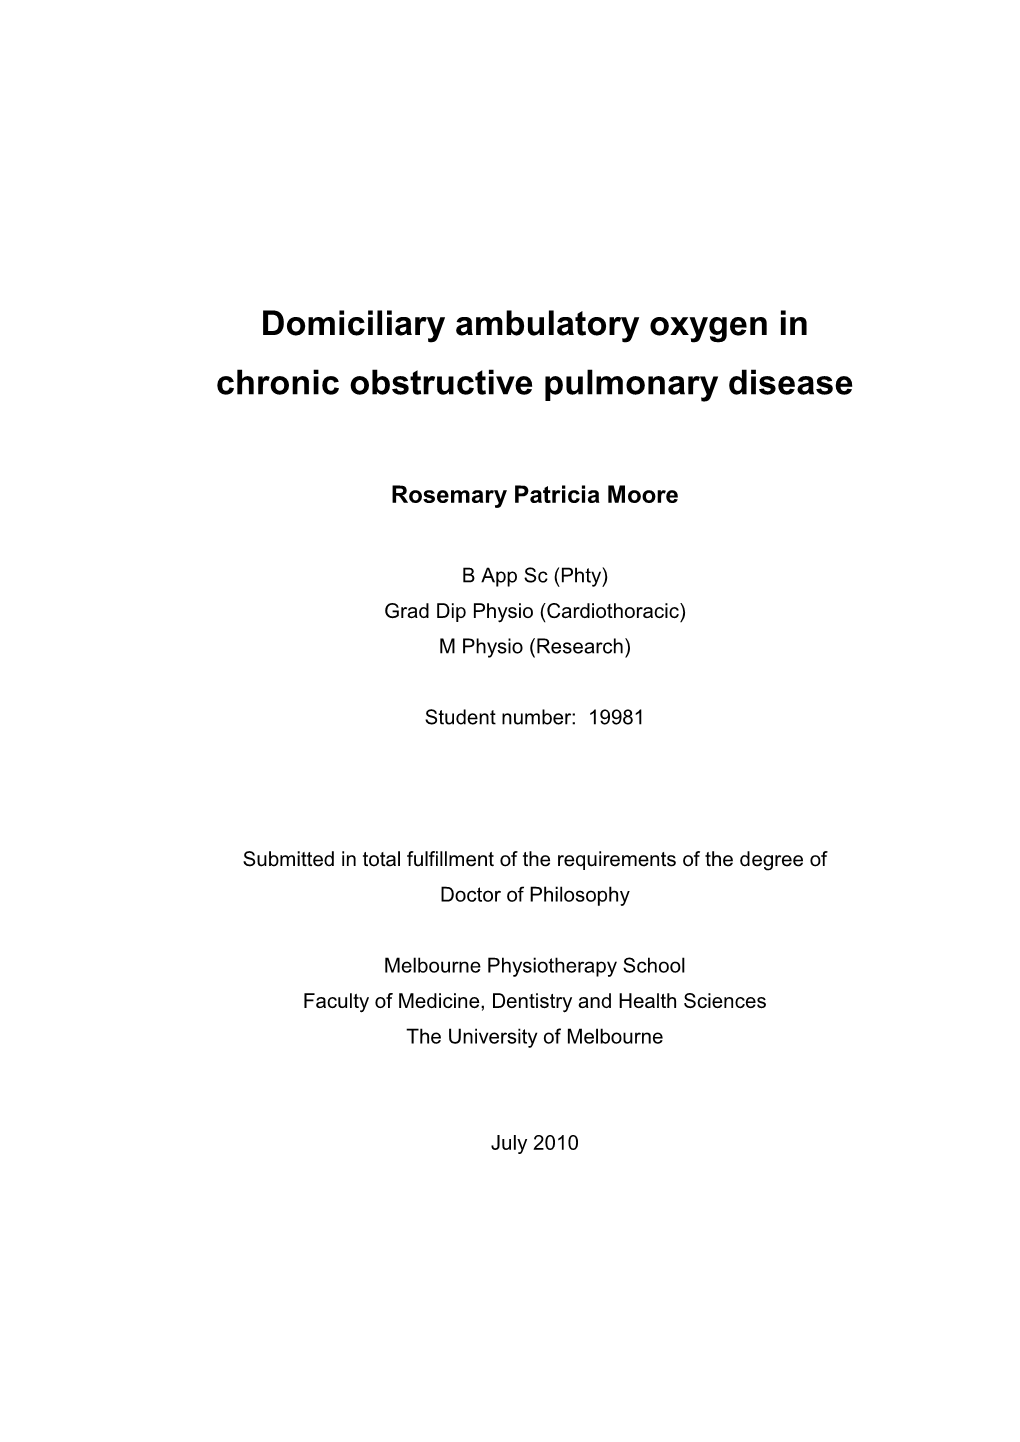 Domiciliary Ambulatory Oxygen in Chronic Obstructive Pulmonary Disease